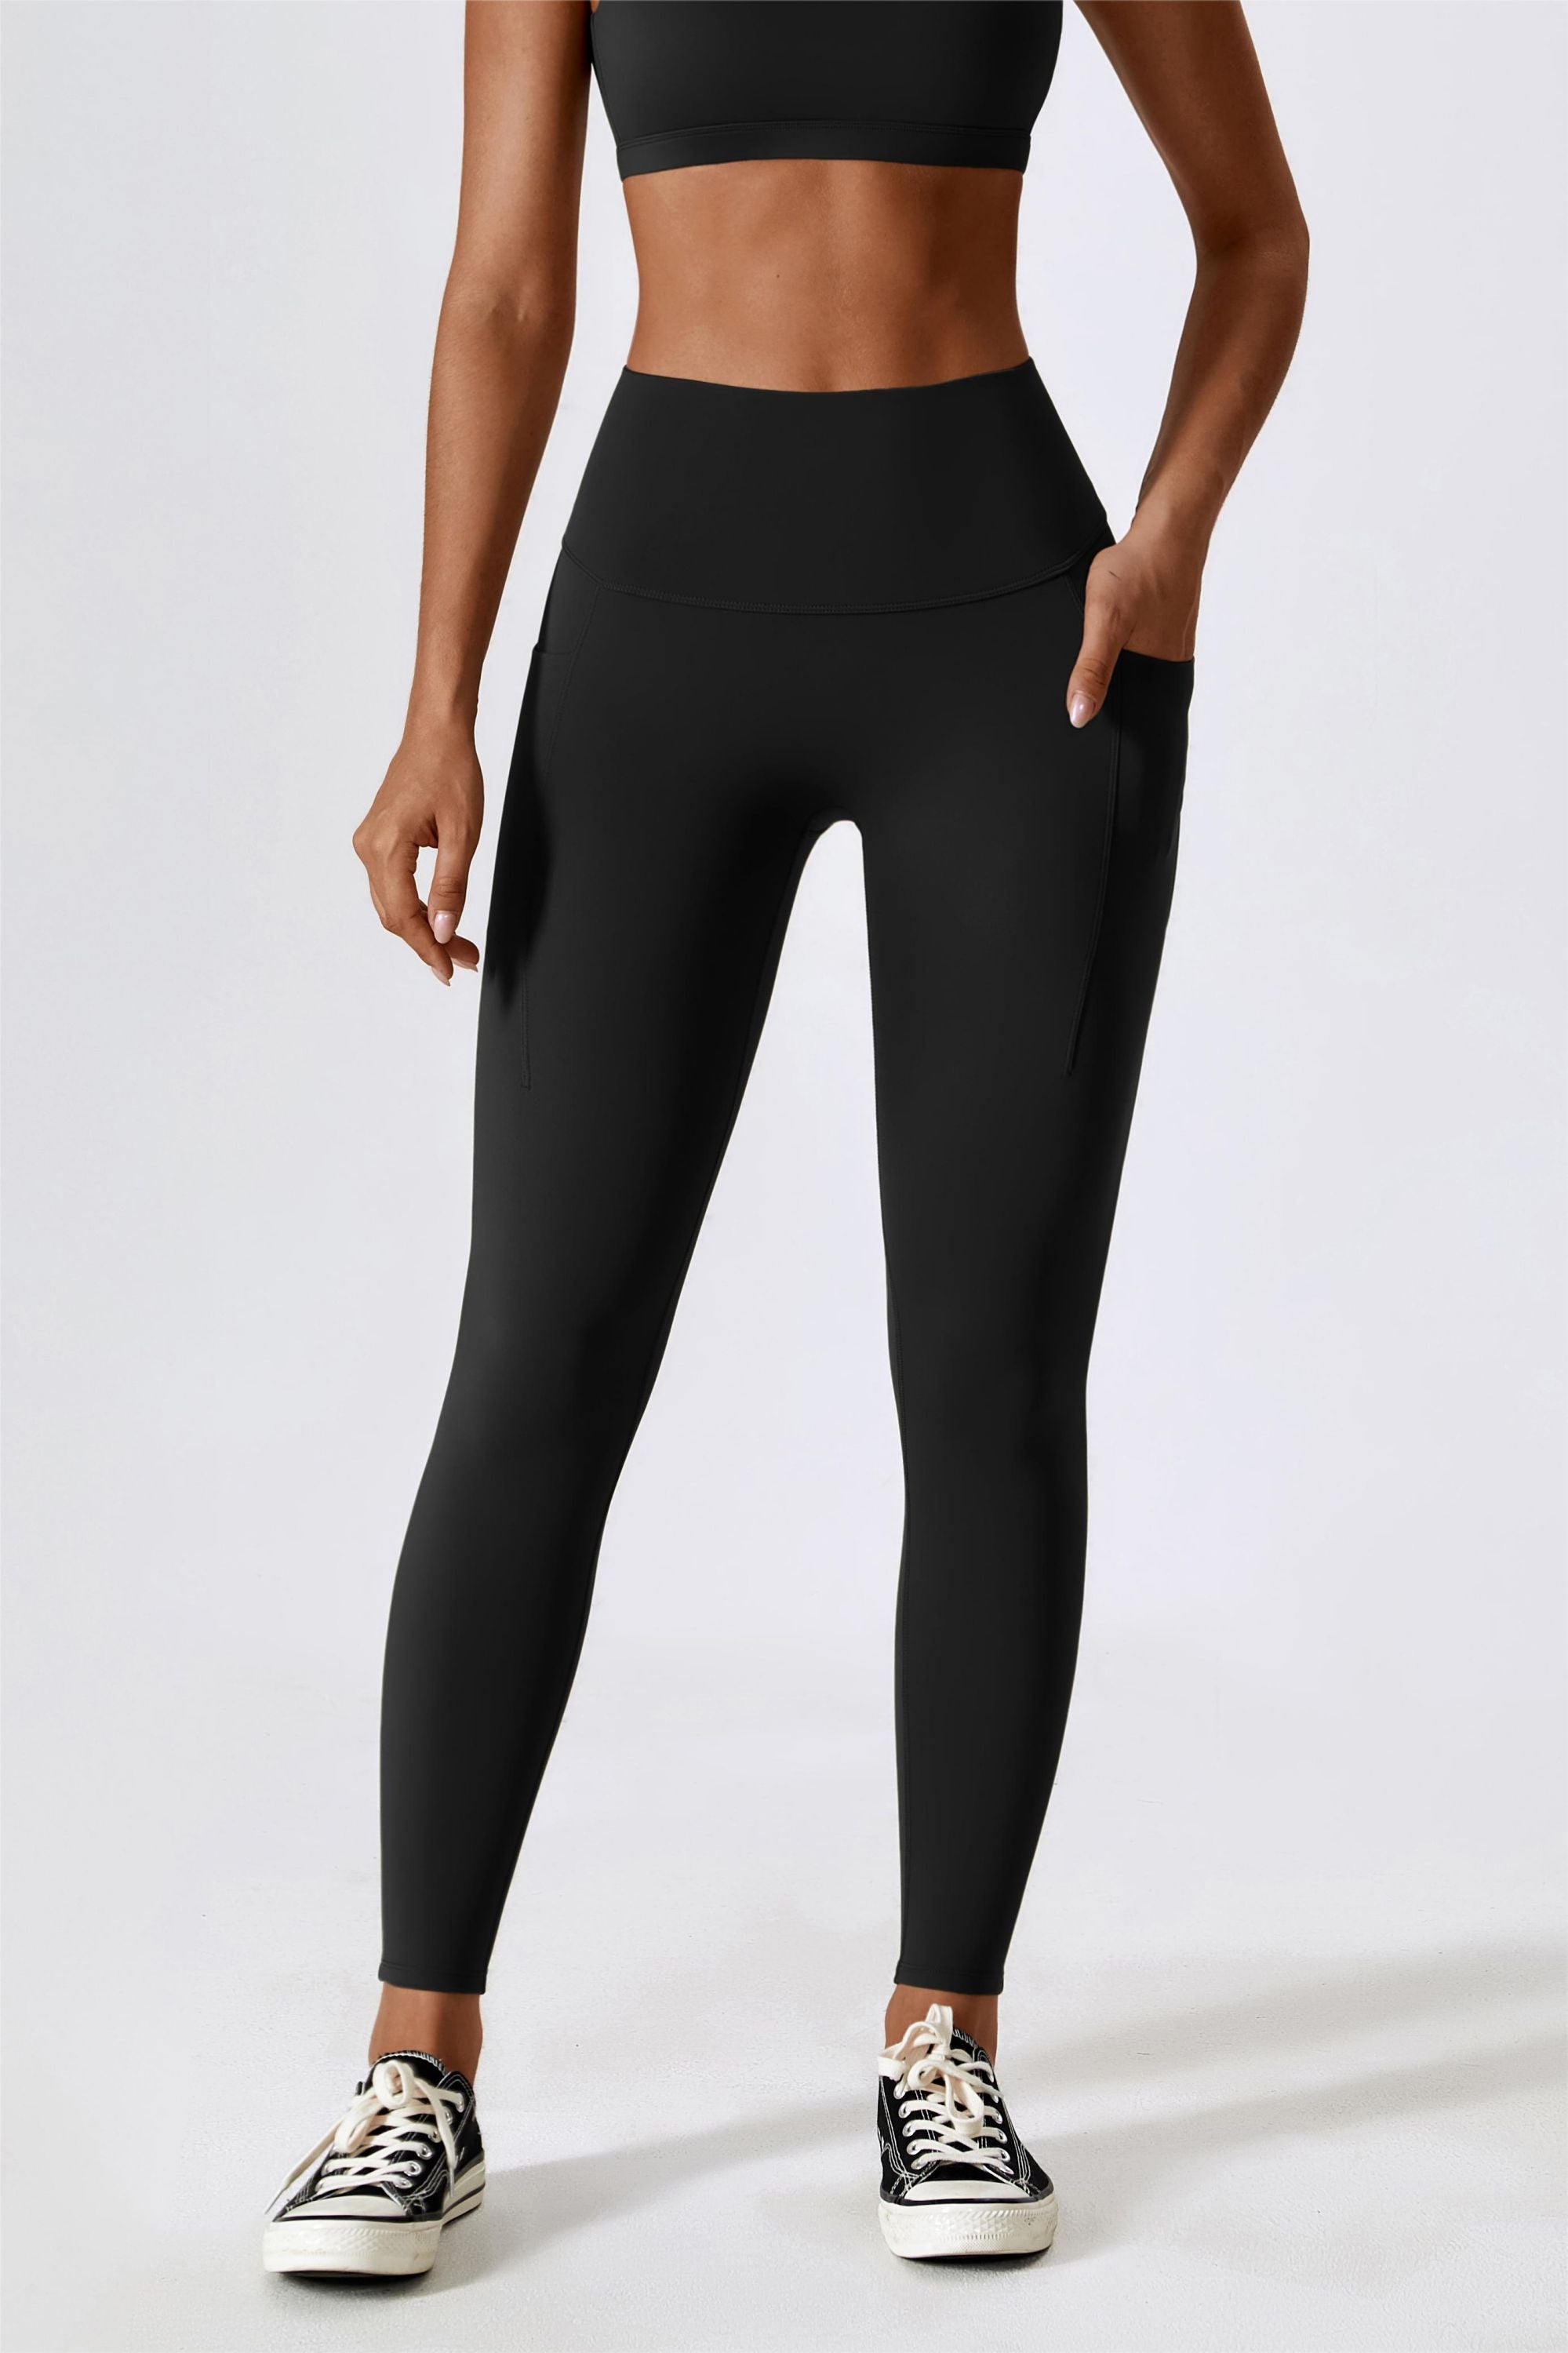 Zipper Design High Waist Tummy Control Yoga Pants Women Black